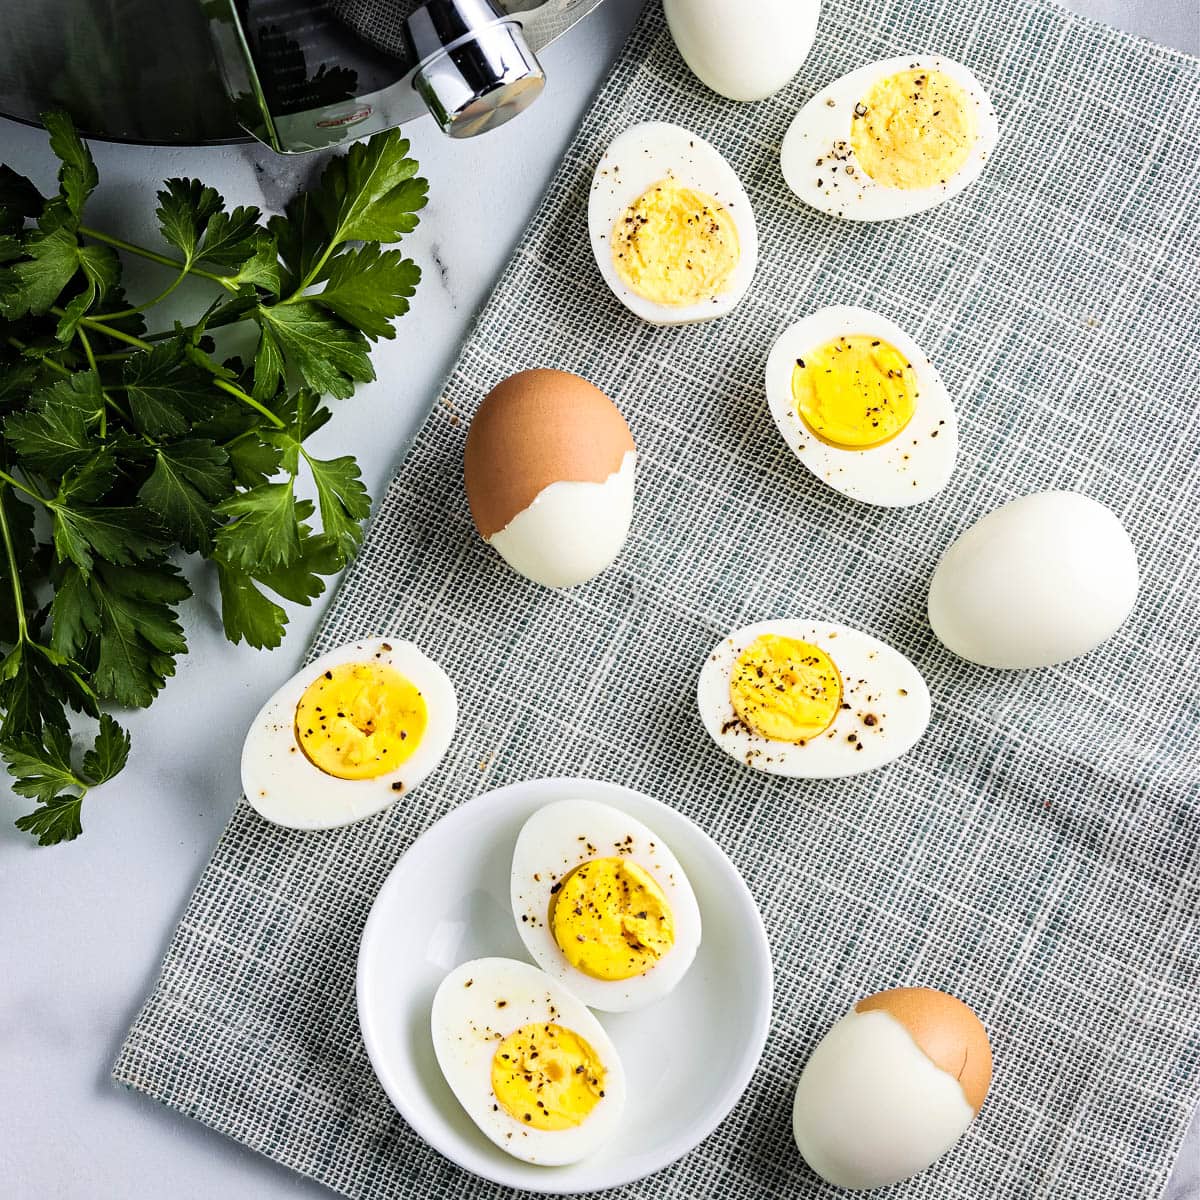 https://www.upstateramblings.com/wp-content/uploads/2022/03/instant-pot-hard-boiled-eggs-6.jpg